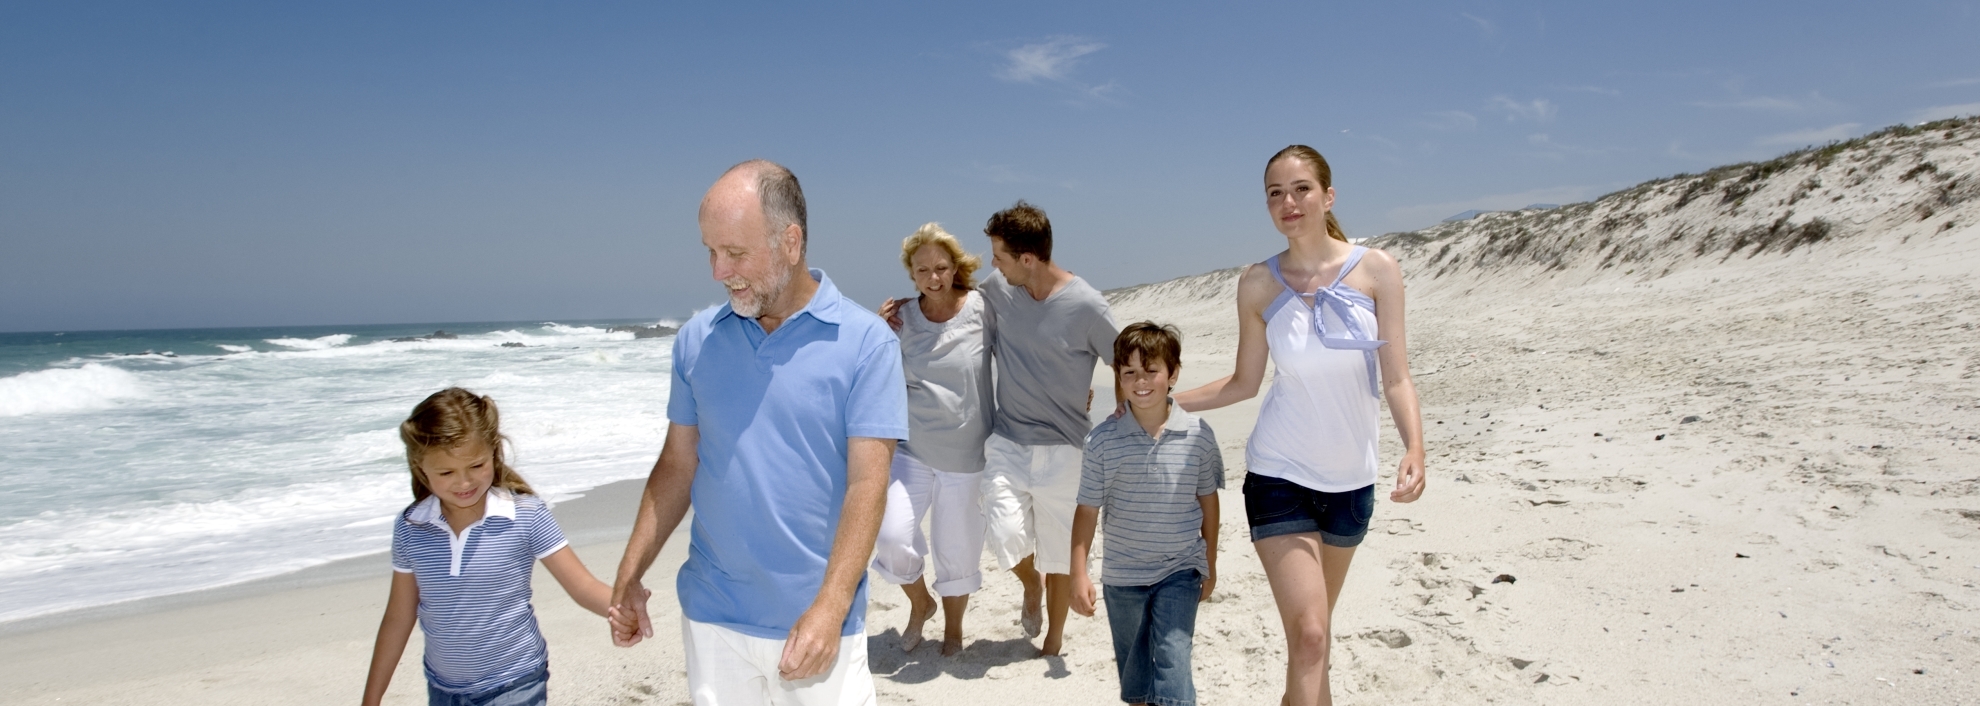 Three generations family walking on beach